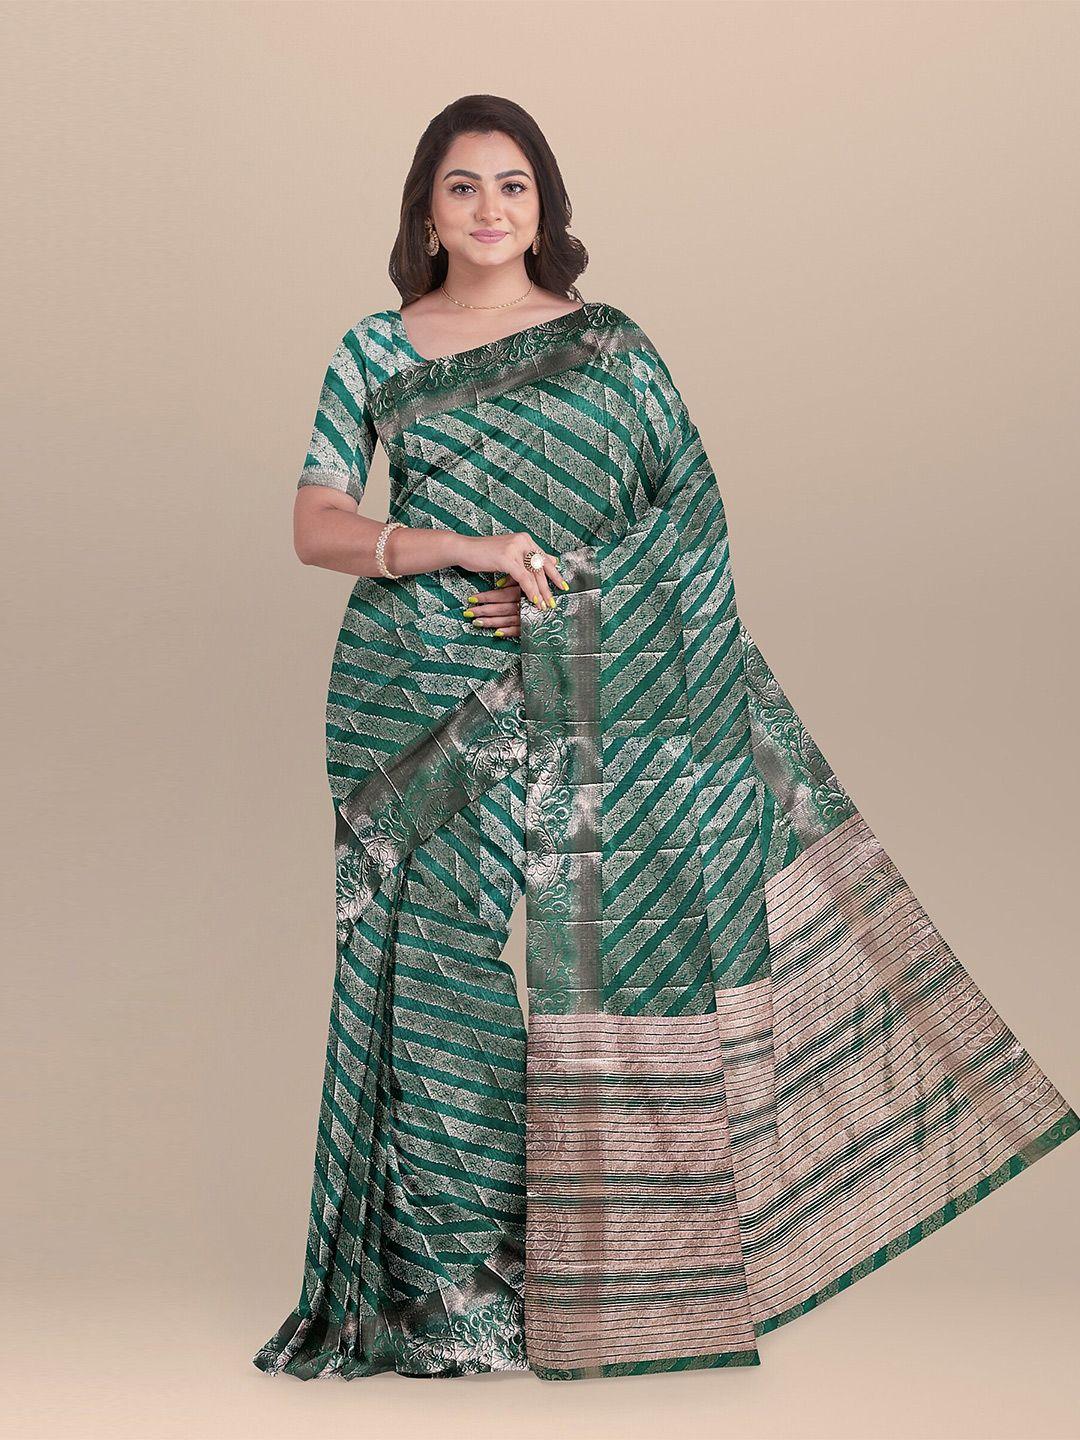 the chennai silks green & gold-toned striped zari jute cotton fusion saree